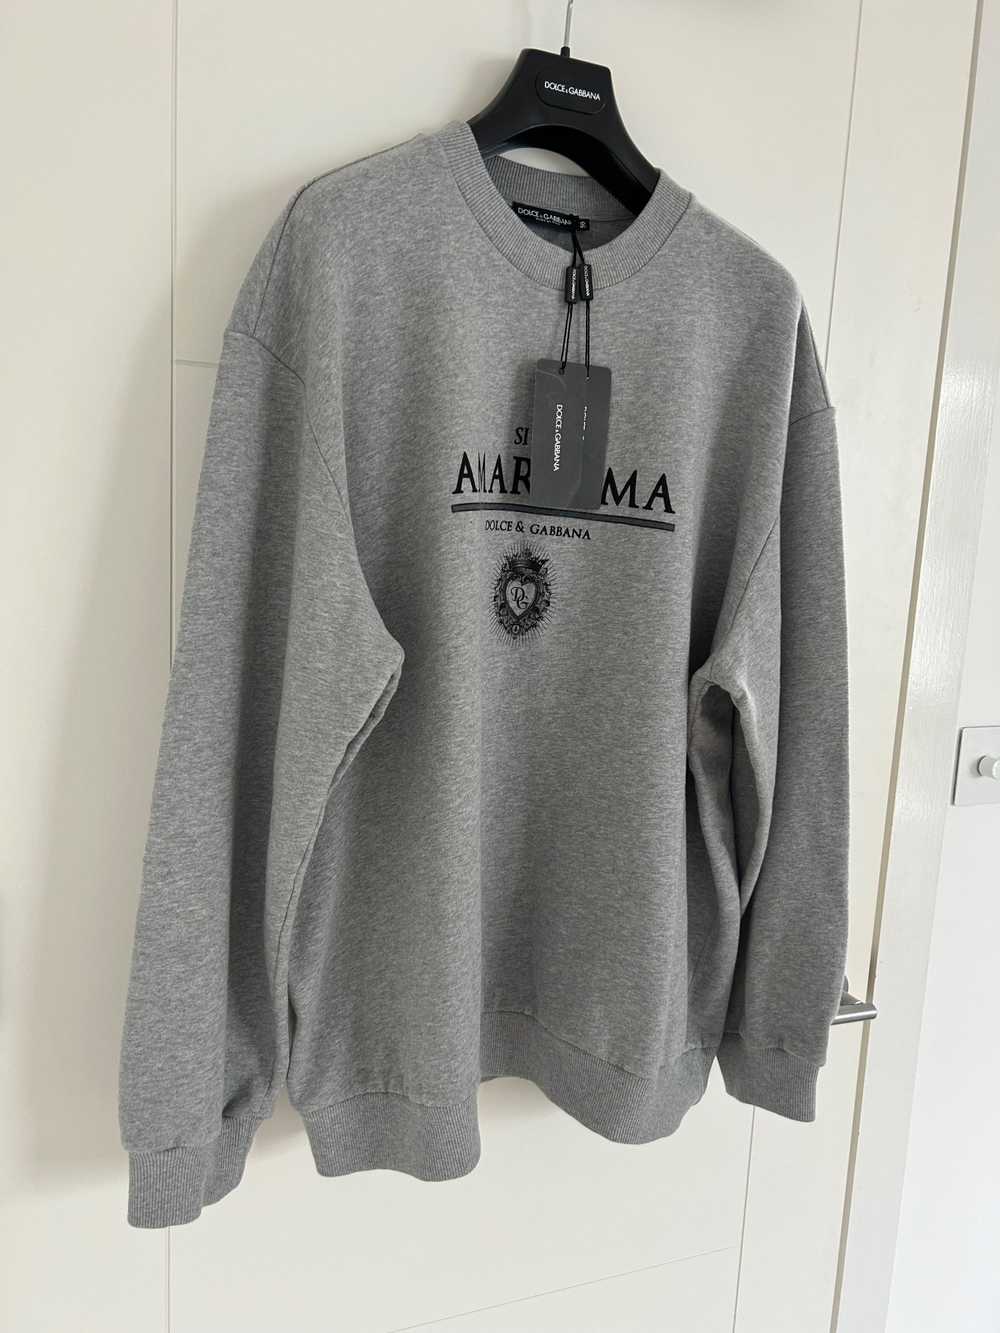 Dolce & Gabbana Amari Ama Cotton Jersey Sweatshirt - image 4